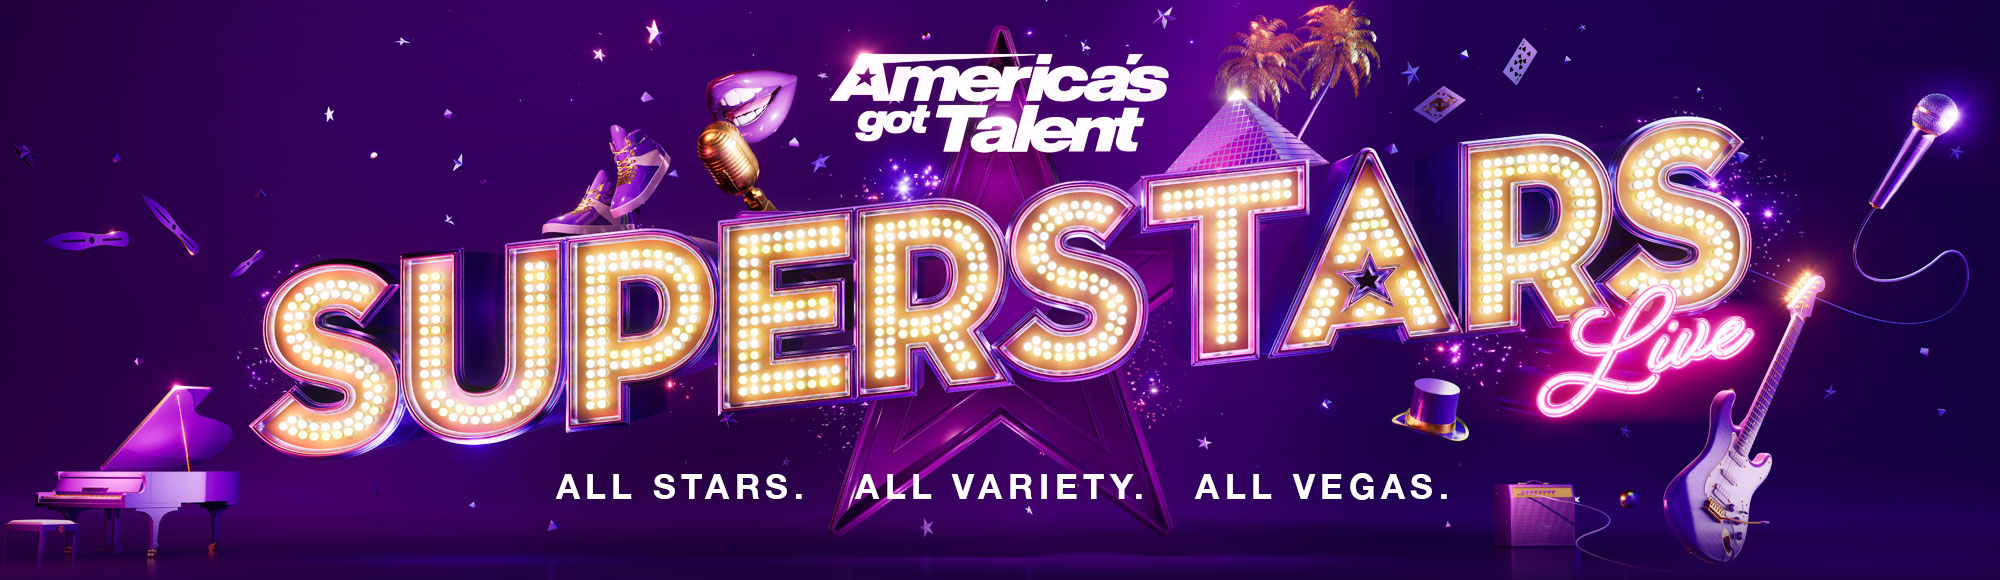 America's Got Talent Presents Superstars Live! Show Las Vegas: Tickets &  Reviews 